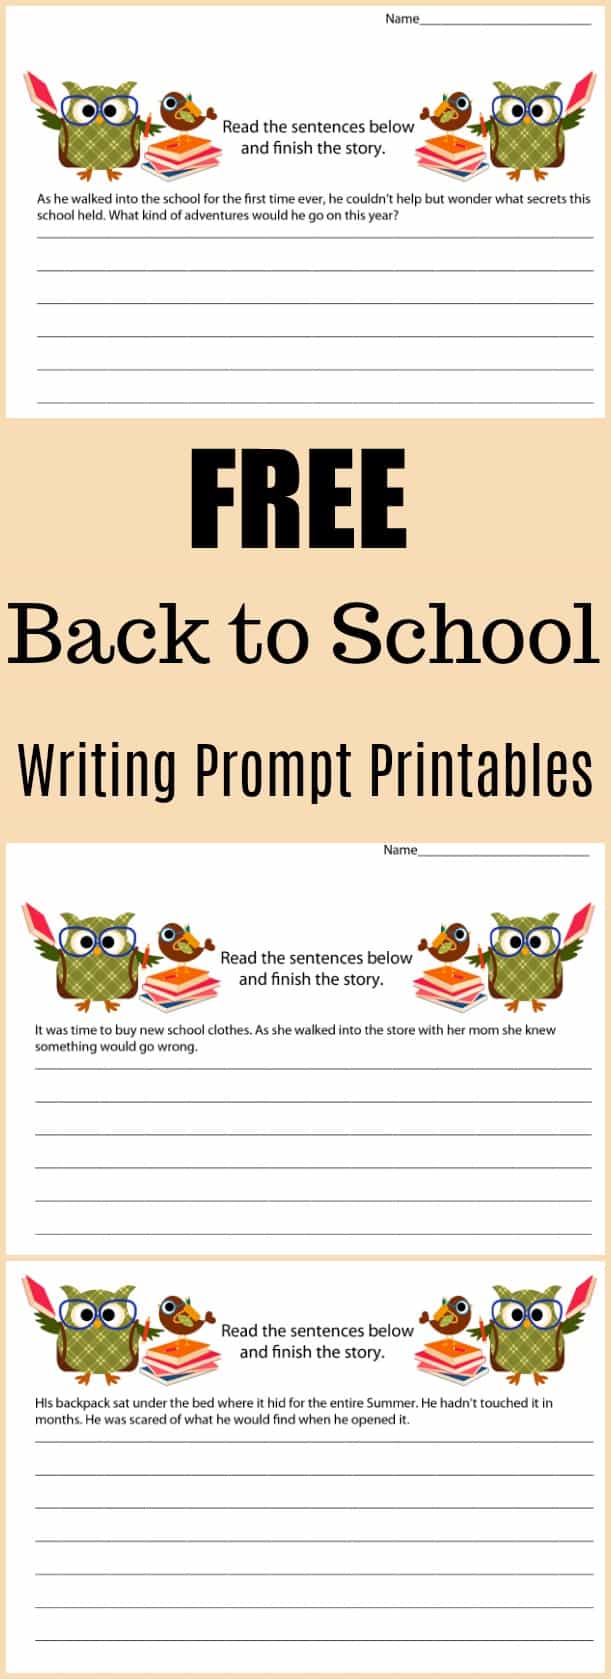 Free Back to School Writing Prompt Printable - #writing #writingprompt #holiday #printable #freeprintable #education #edchat #homeschool #homeschooling #backtoschool